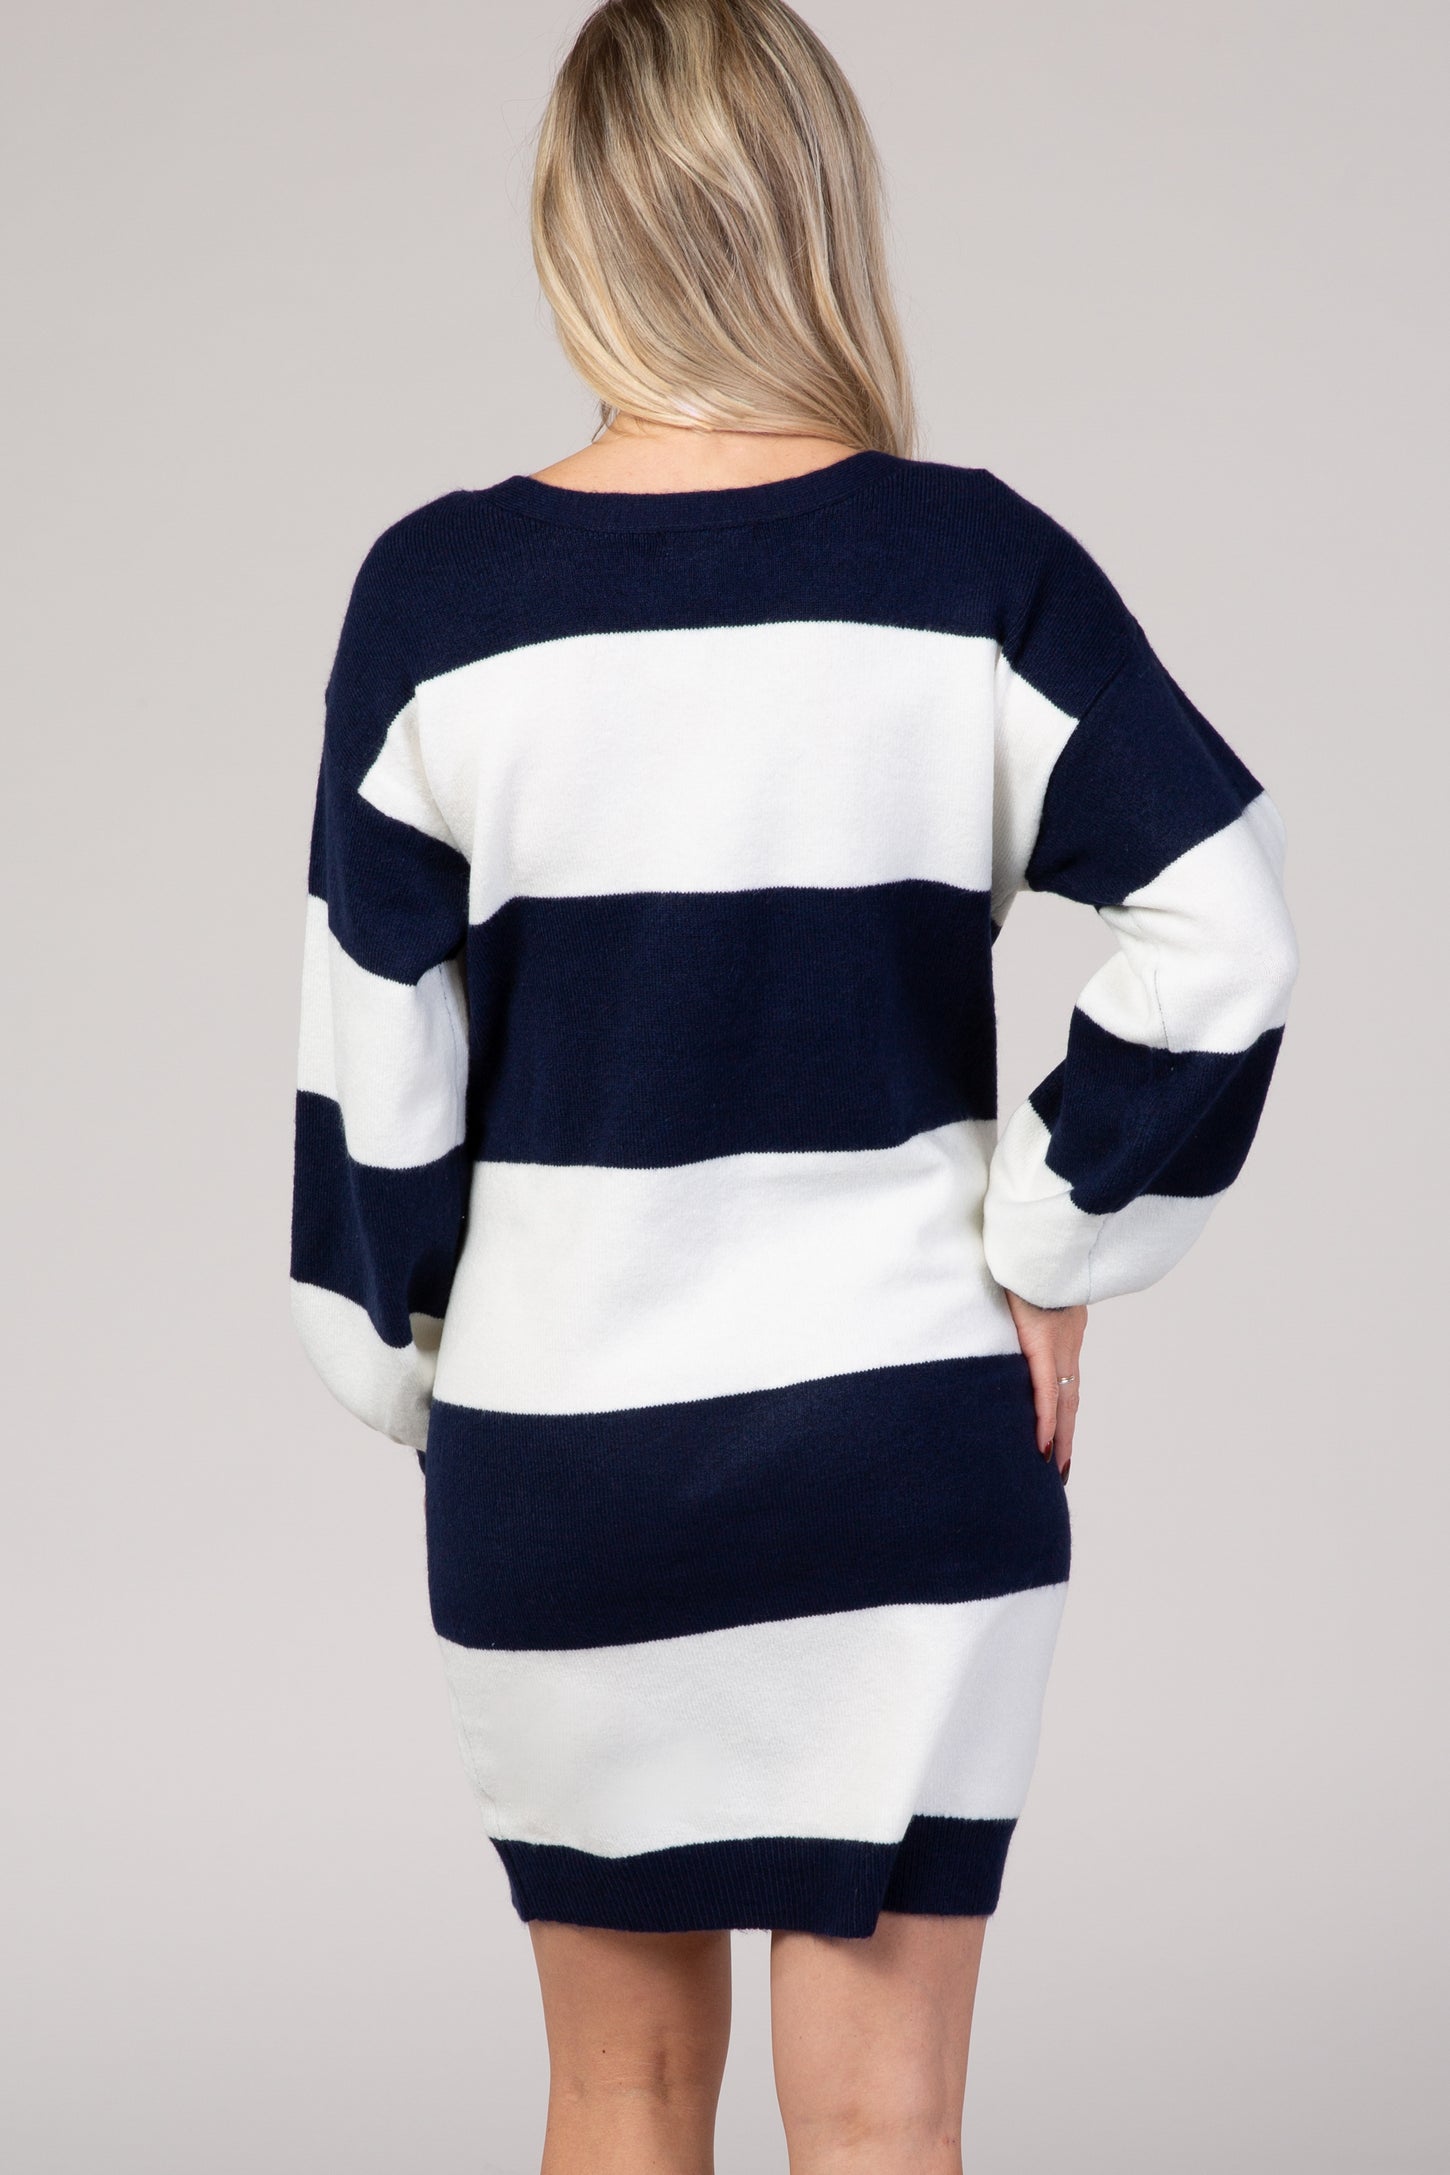 Navy Blue Large Striped Long Bubble Sleeve Knit Maternity Sweater Dress